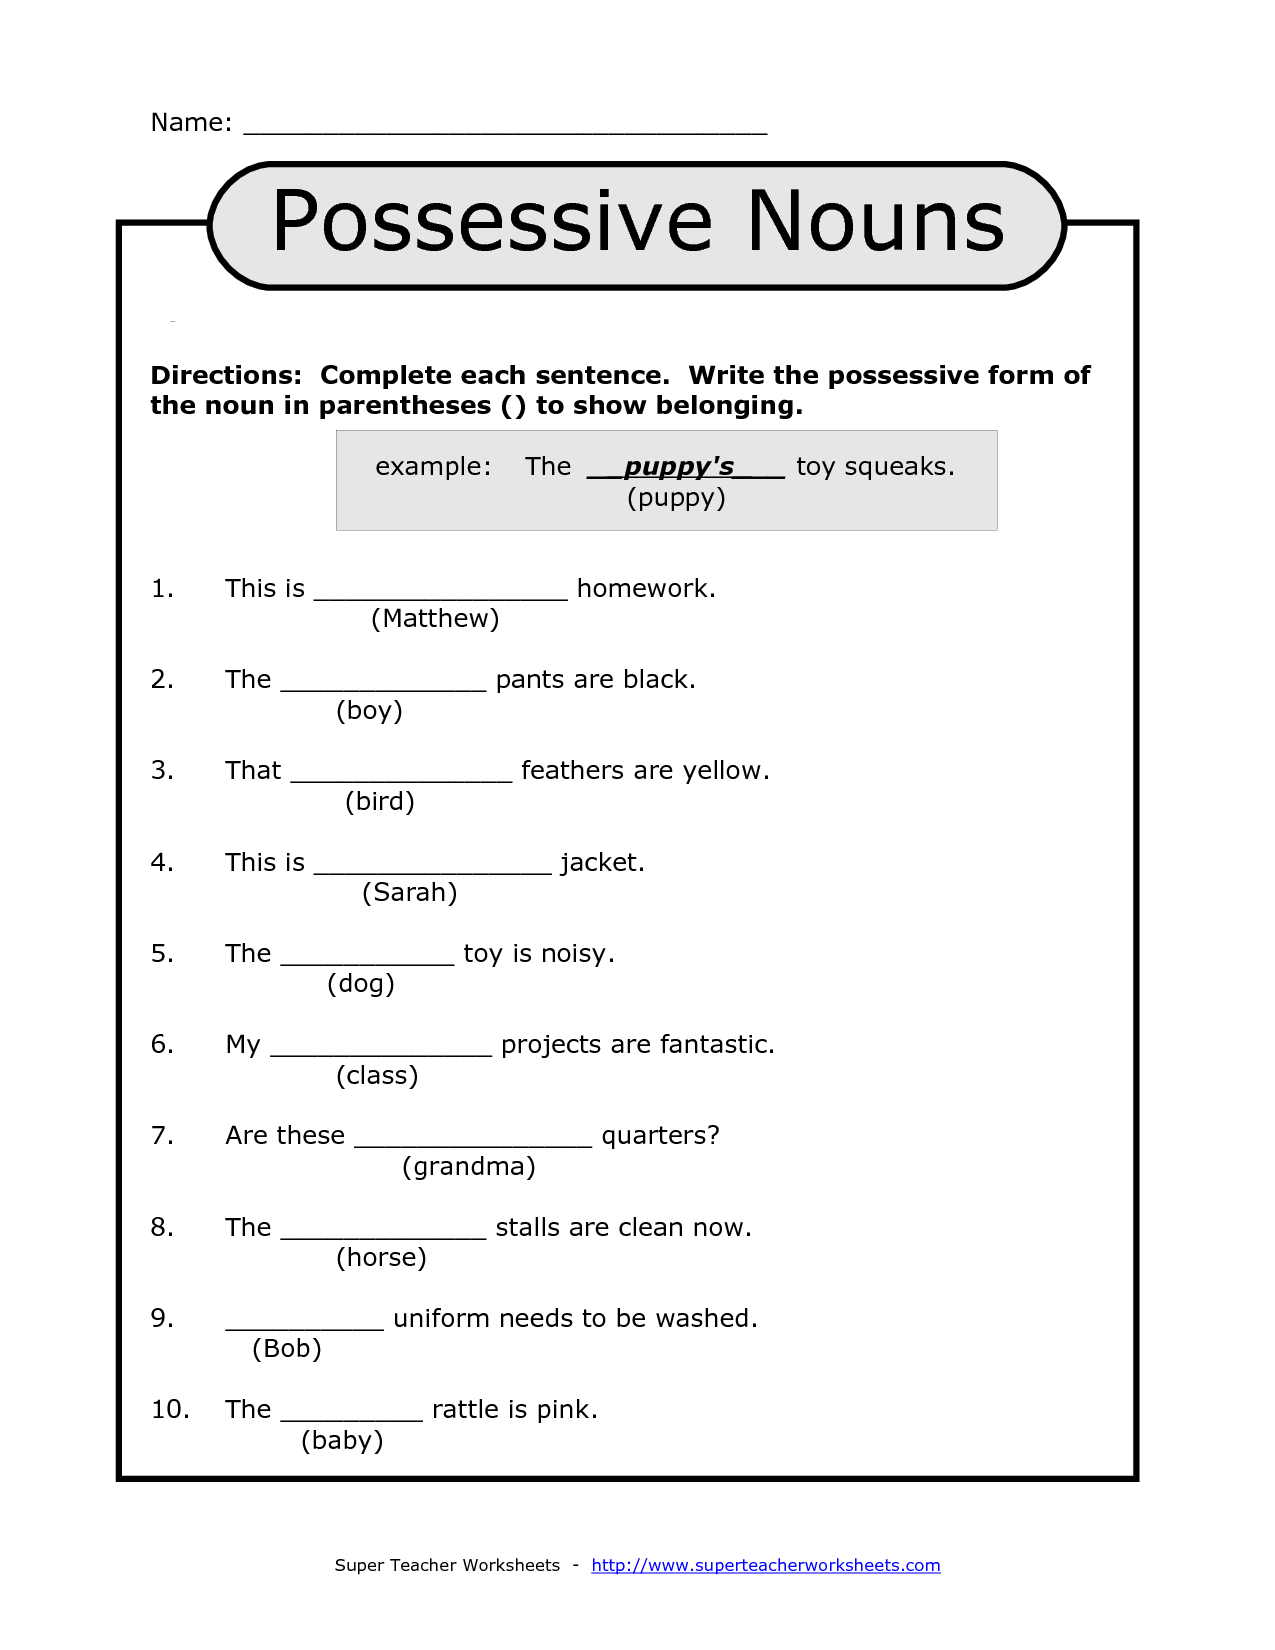 16 Best Images Of Worksheets Possessive Pronouns Sentence Possessive Pronouns Worksheet